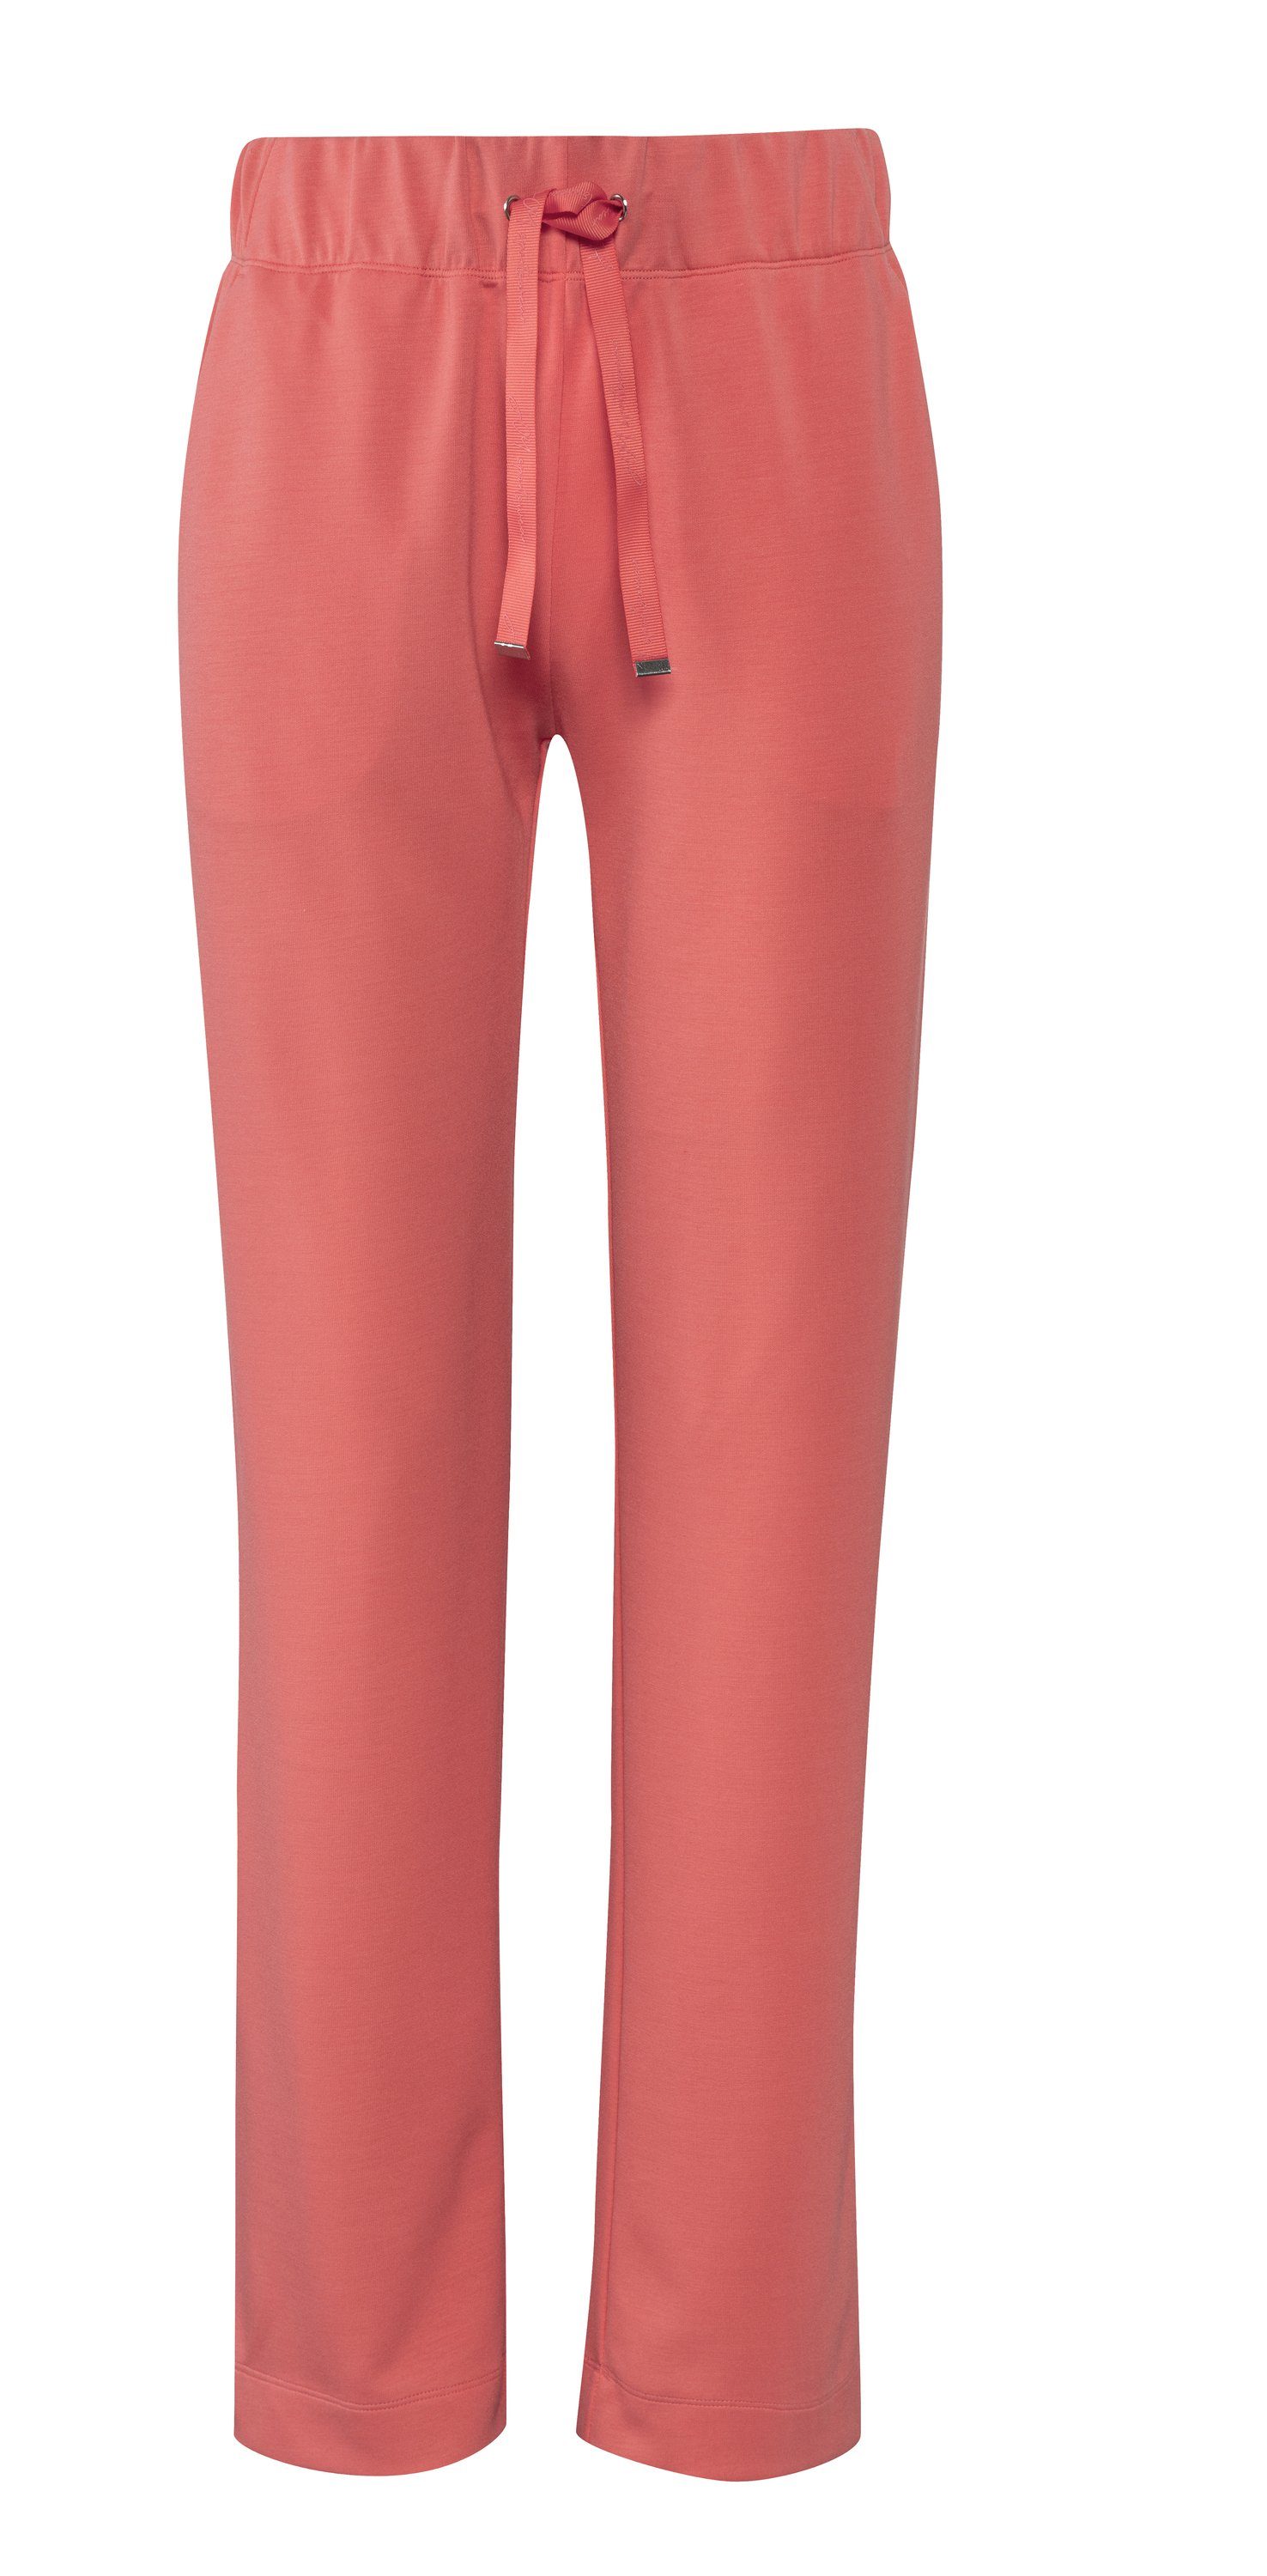 Joy Sportswear Sporthose Hose AURORA coral pink